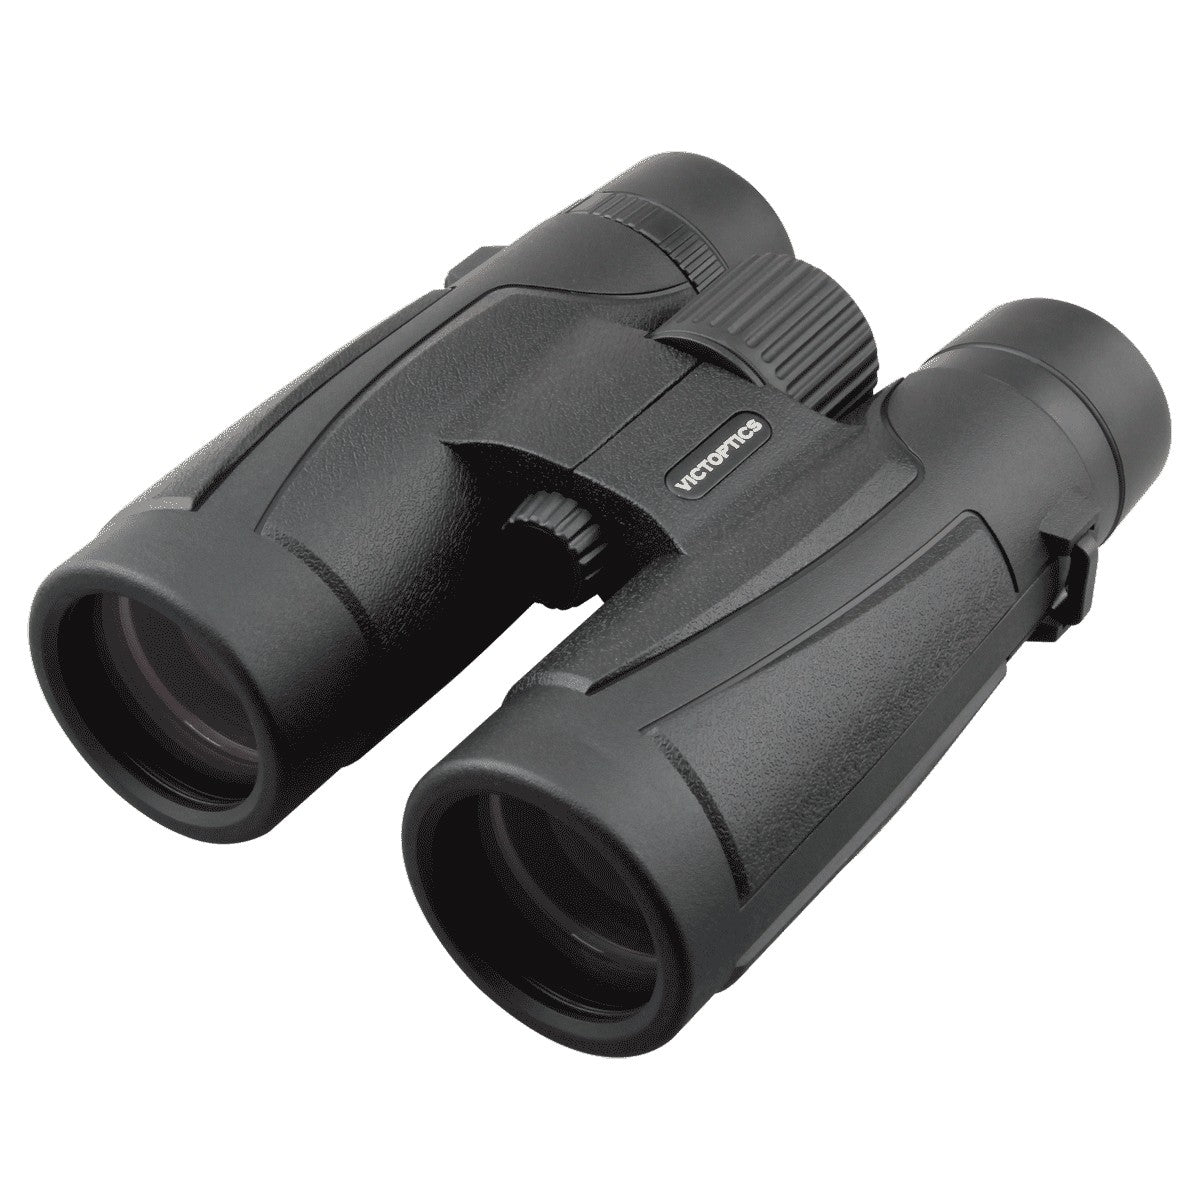 Vector Optics Sentinel 8x25 Binocular. 5 Groups 7 Lens Binocular.